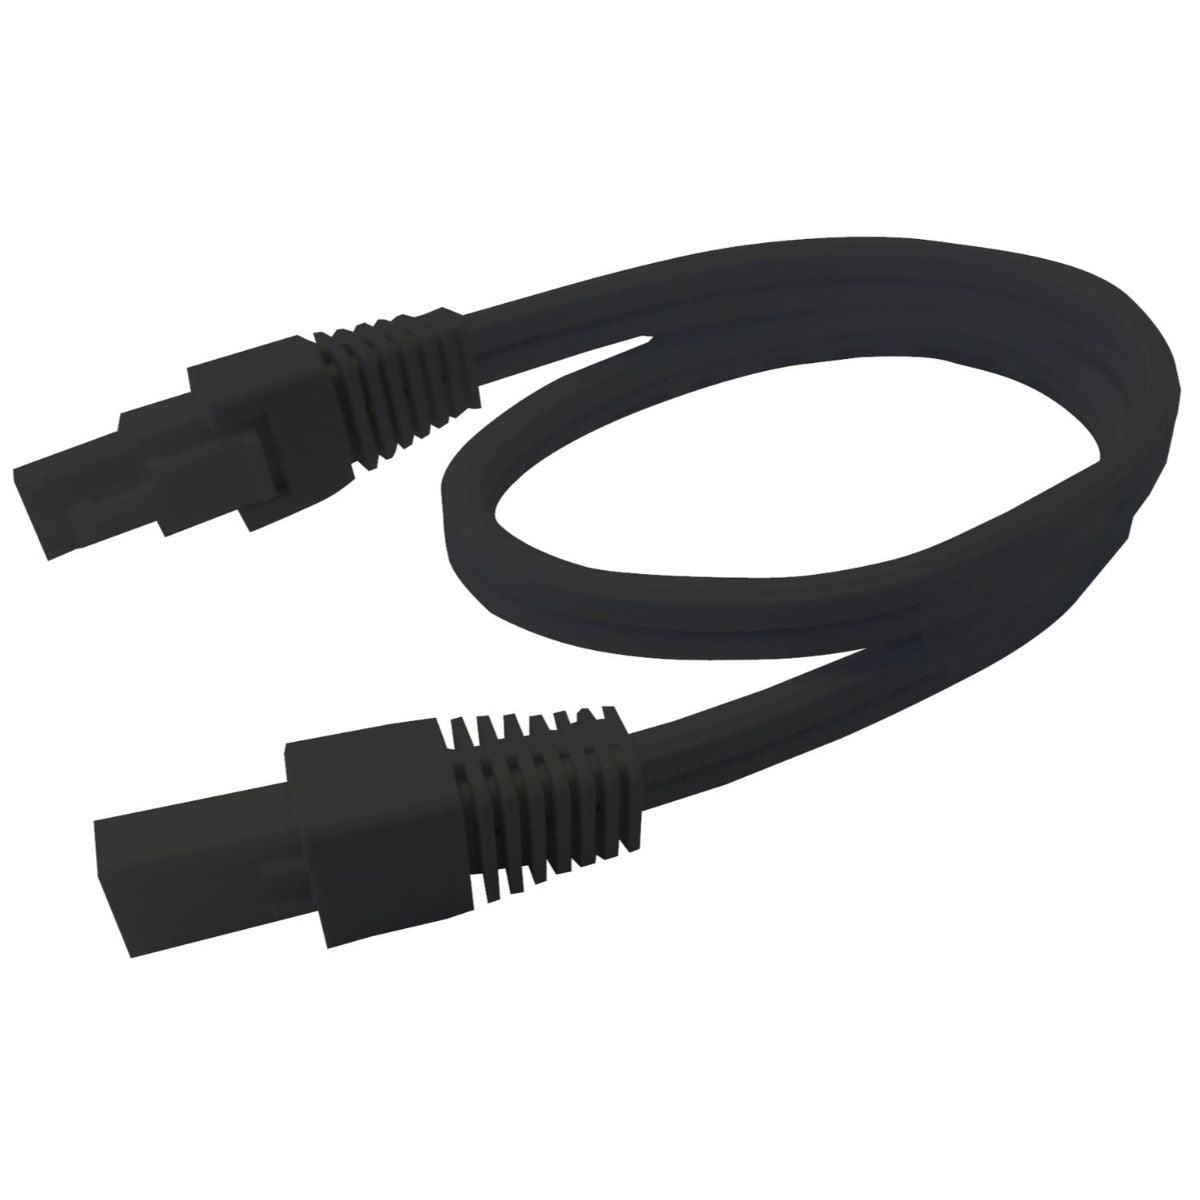 36in. Interconnect Cord for Elena Task Lighting, Black